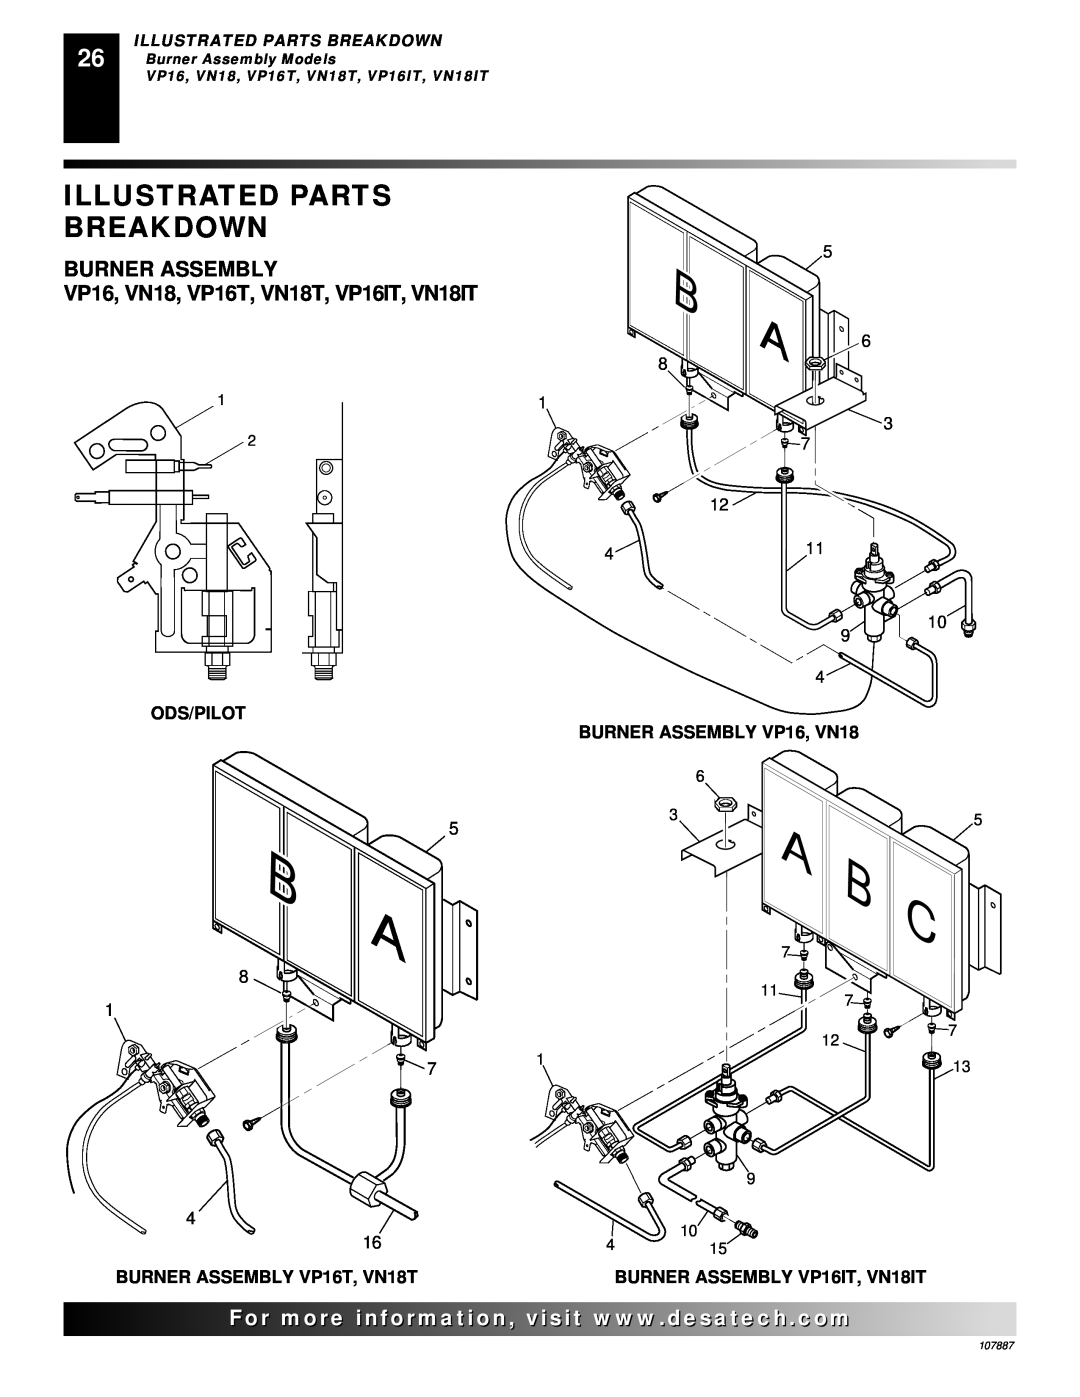 Vanguard Heating Burner Assembly, VP16, VN18, VP16T, VN18T, VP16IT, VN18IT, 5 6 3, Illustrated Parts Breakdown, 107887 